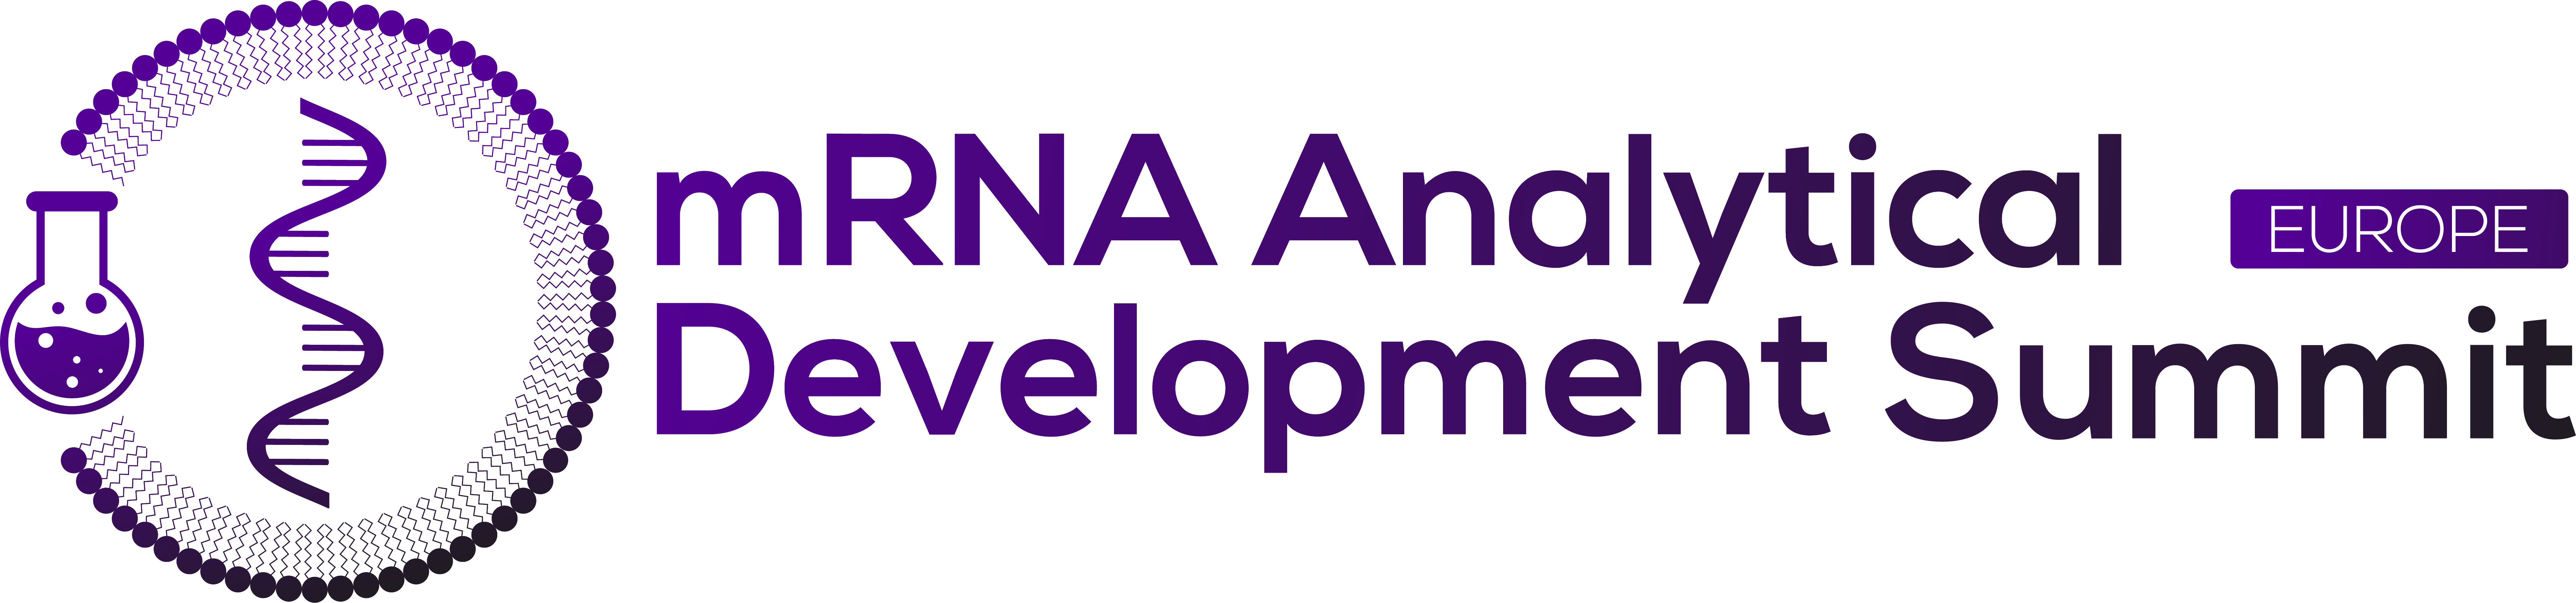 mRNA Analytical Development Summit Europe logo